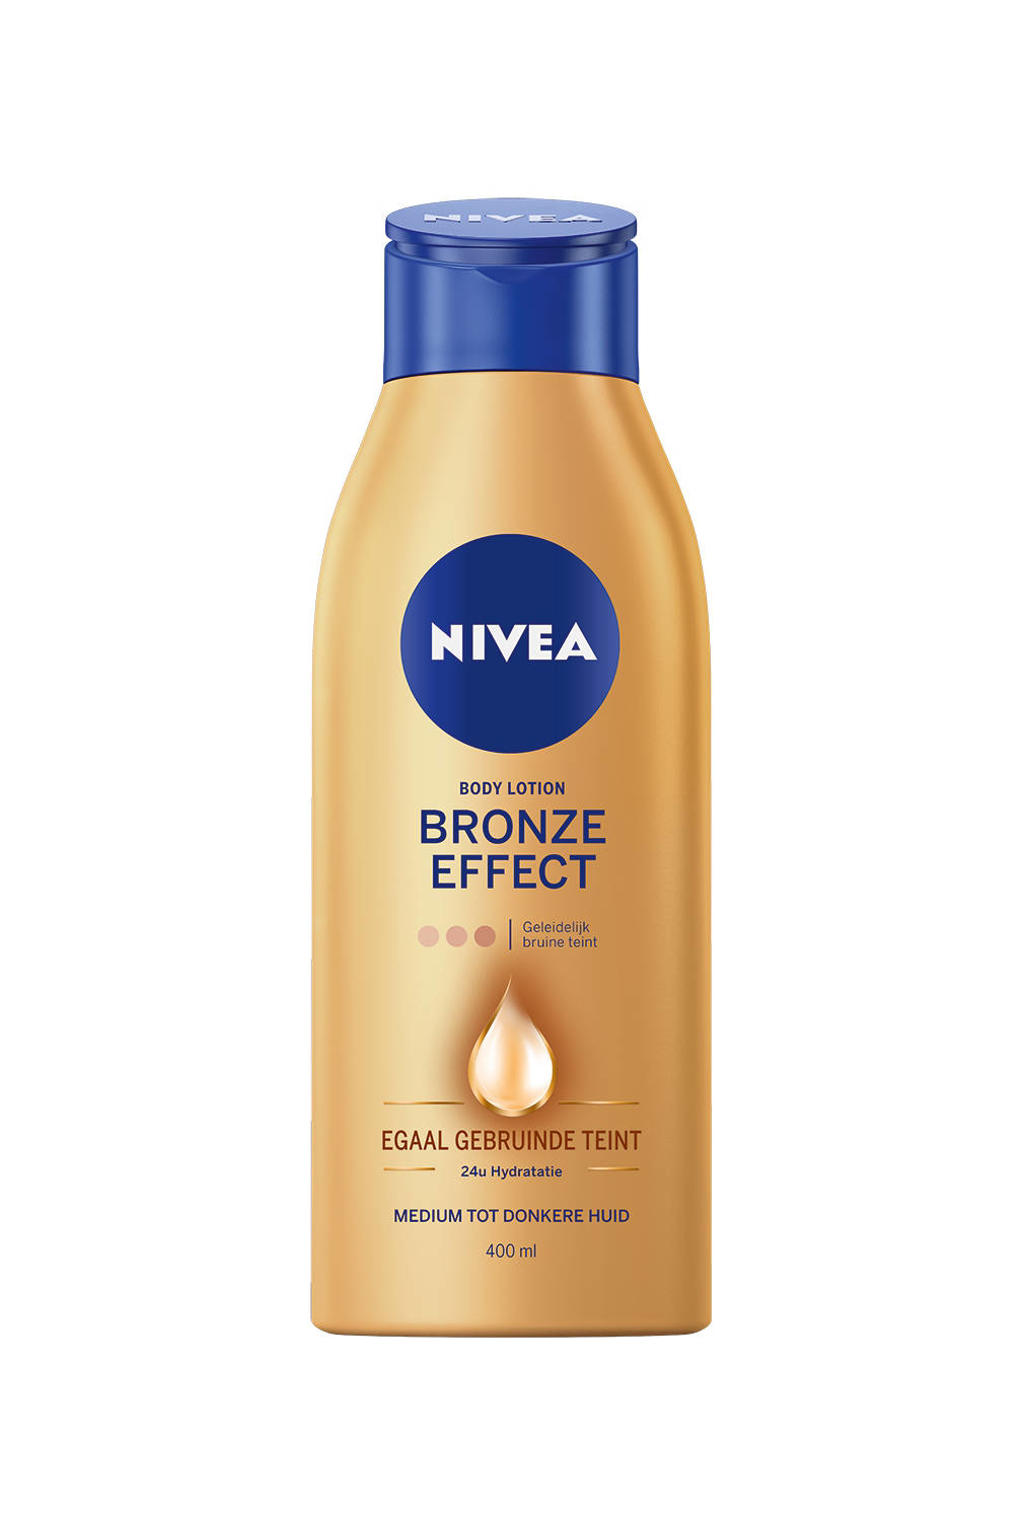 NIVEA bronze effect medium tot donkere huid body lotion - 400 ml